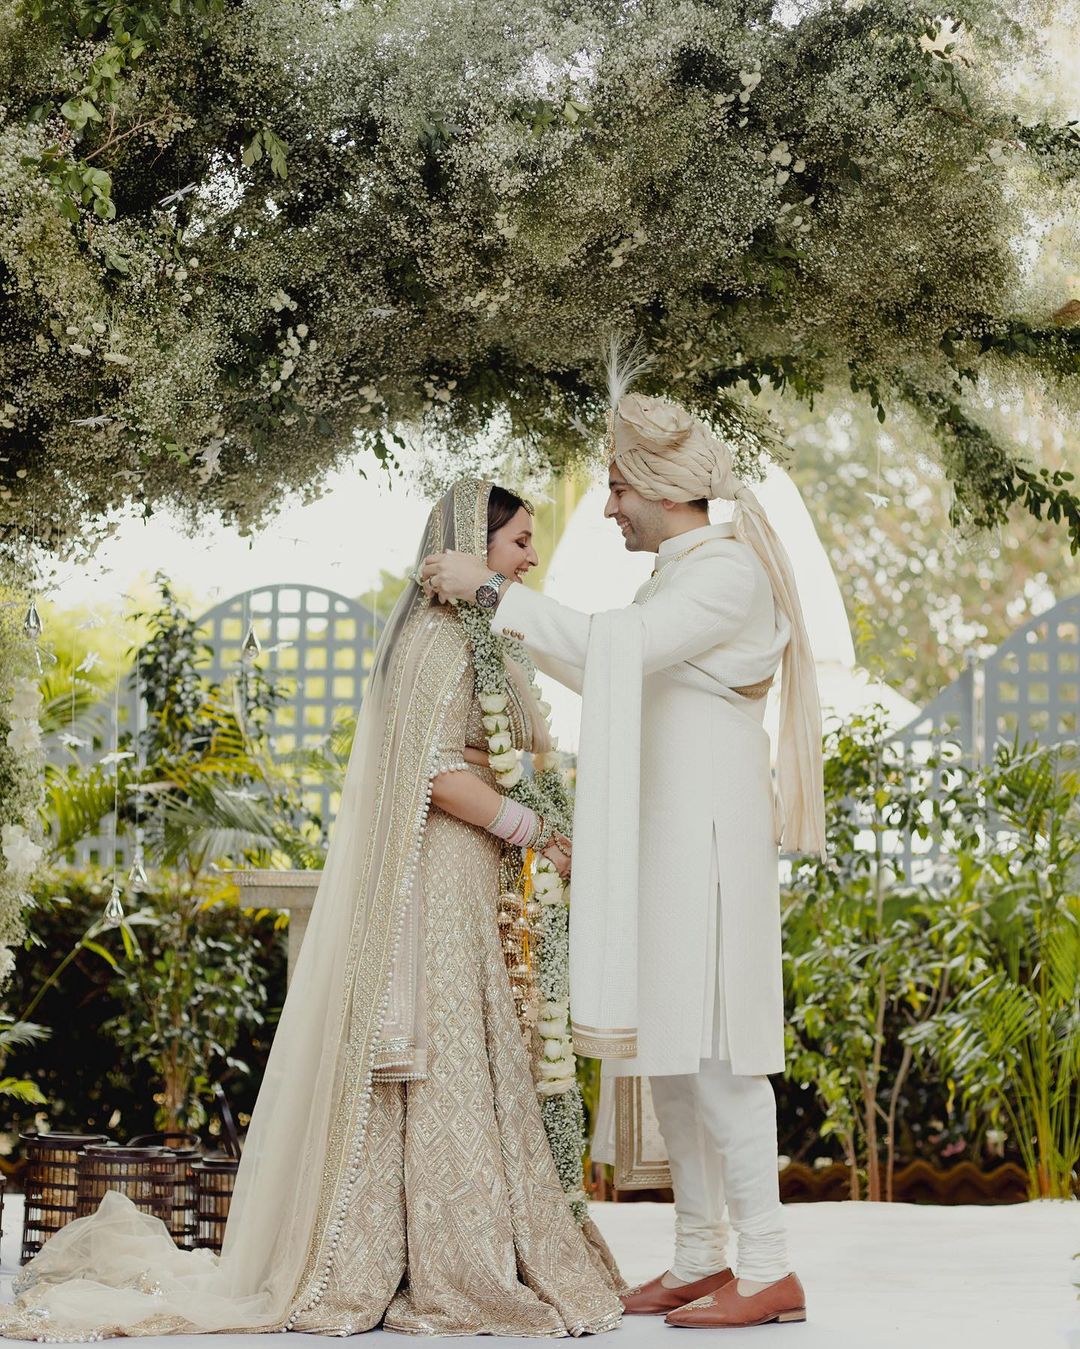 Parineeti Chopra's wedding look